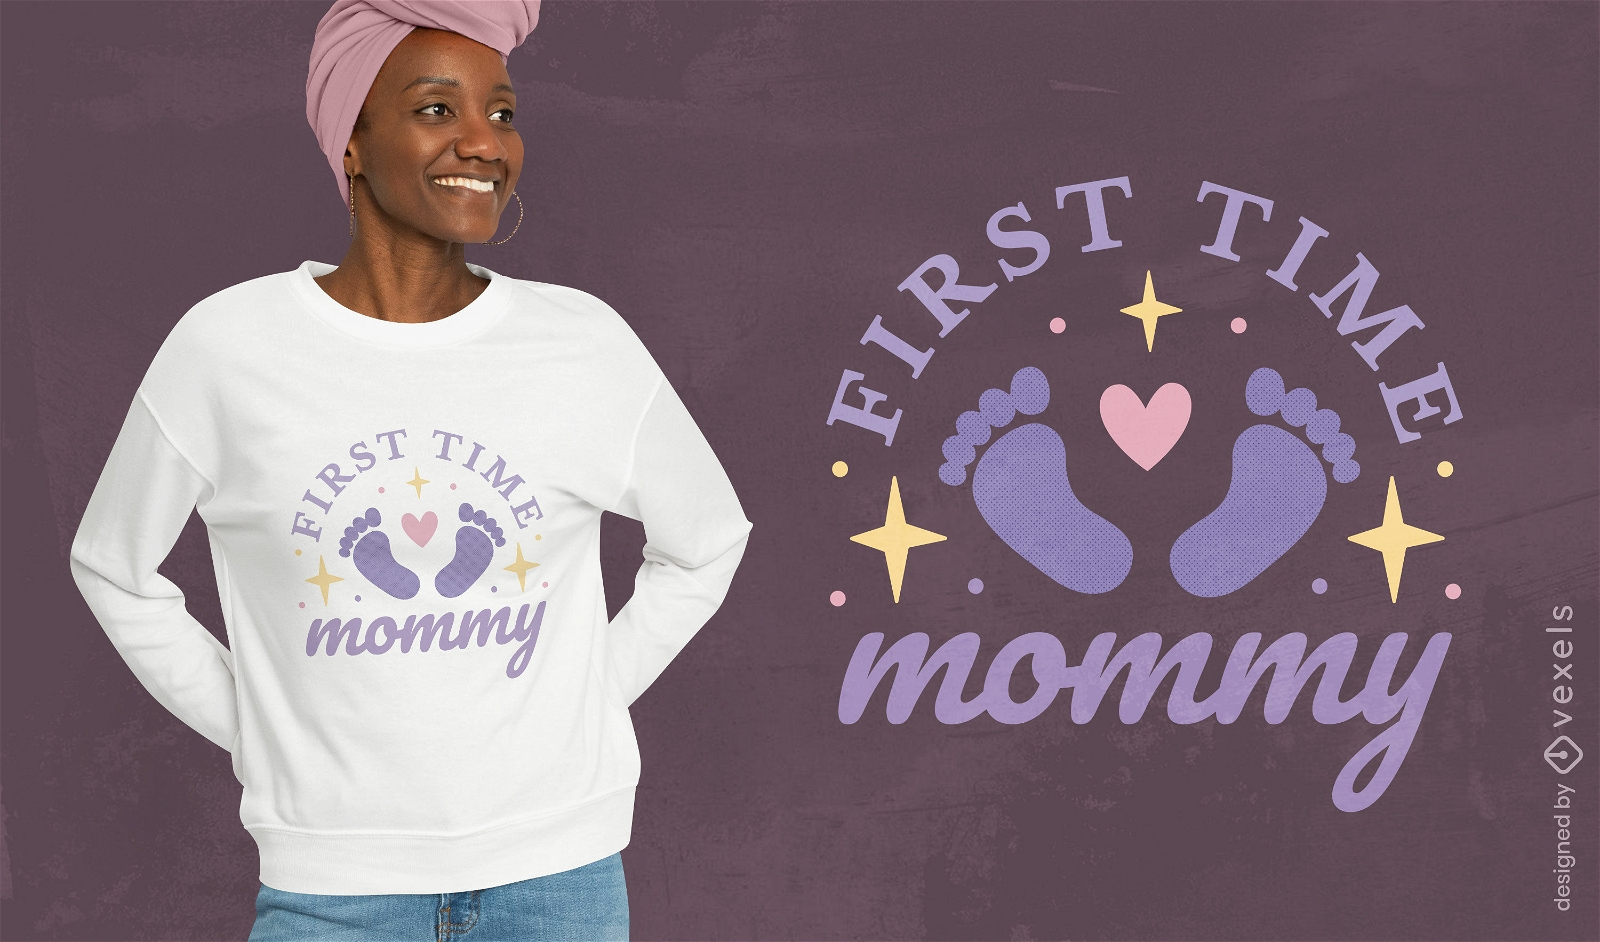 New mom celebration t-shirt design